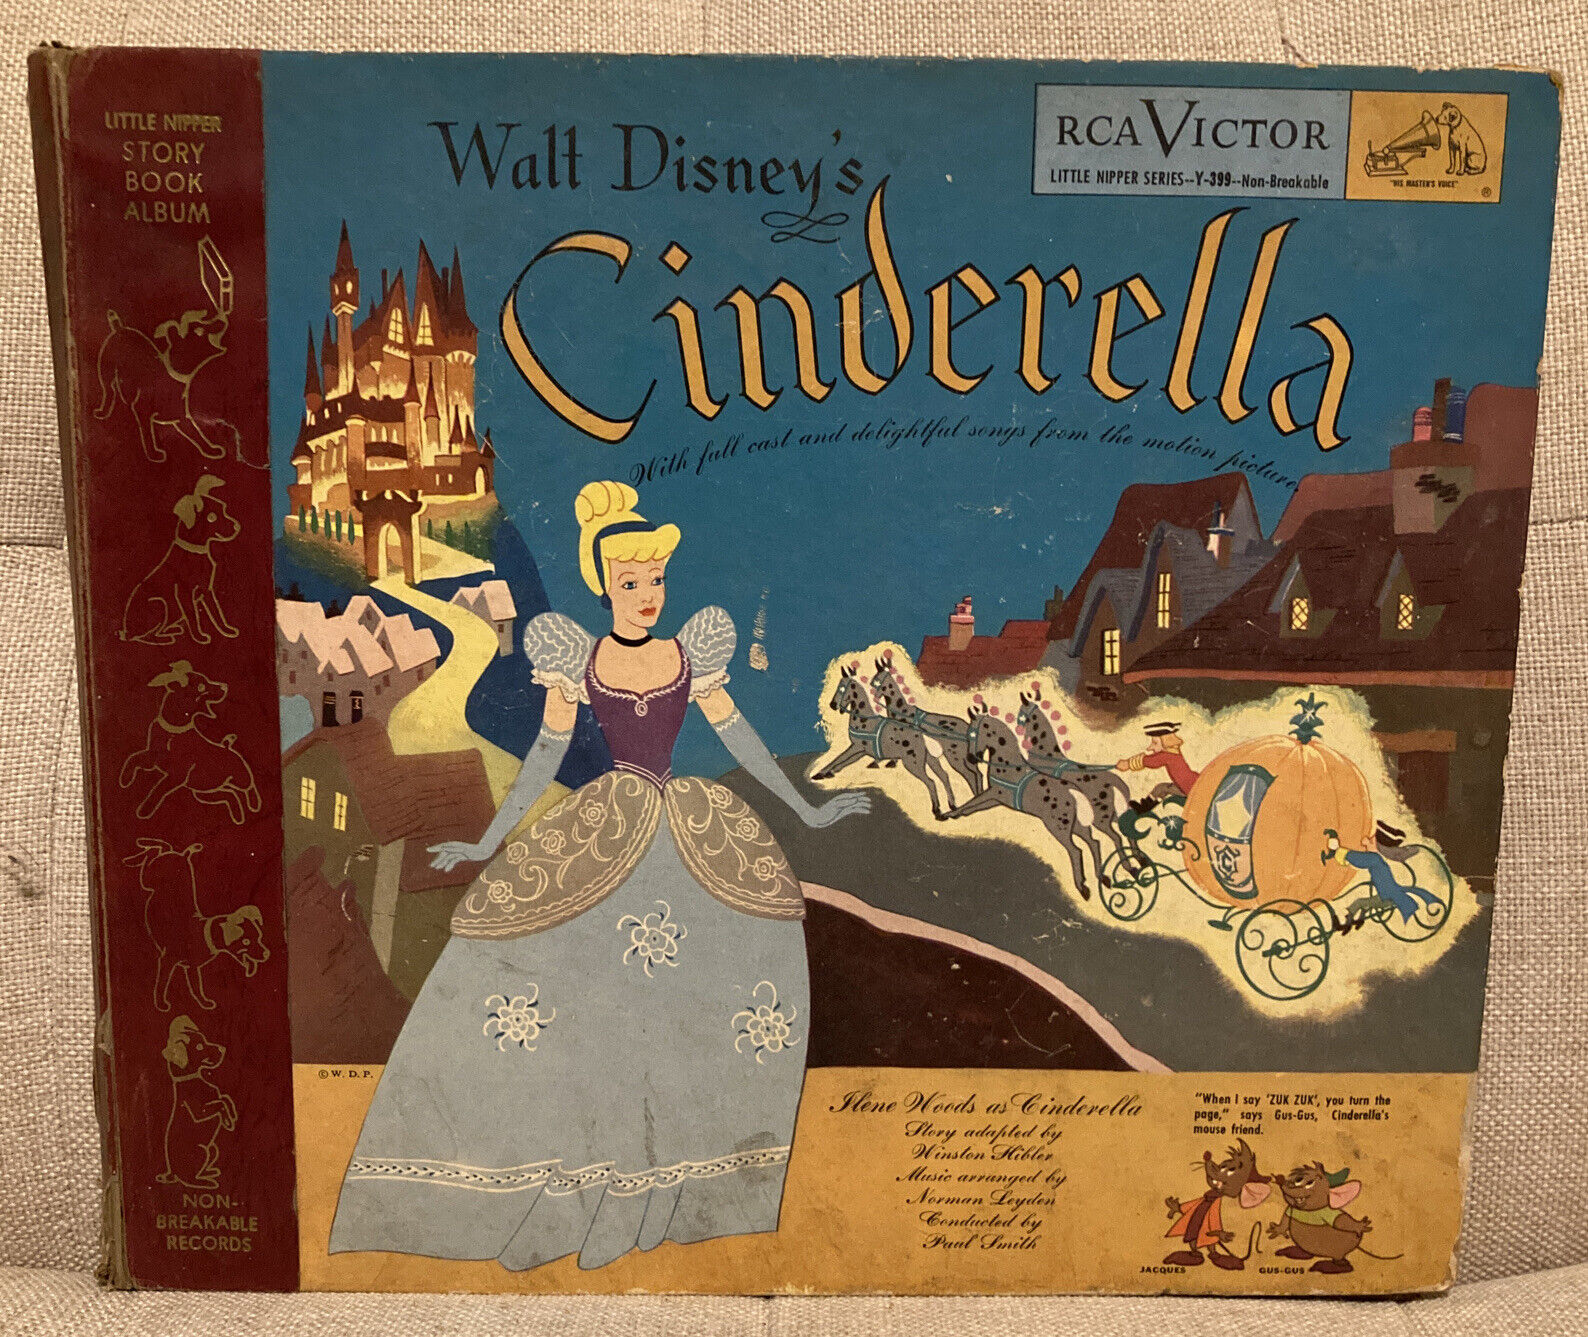 Walt Disney’s Cinderella Vintage 1949 Storybook Album. RCA Little Nipper Series